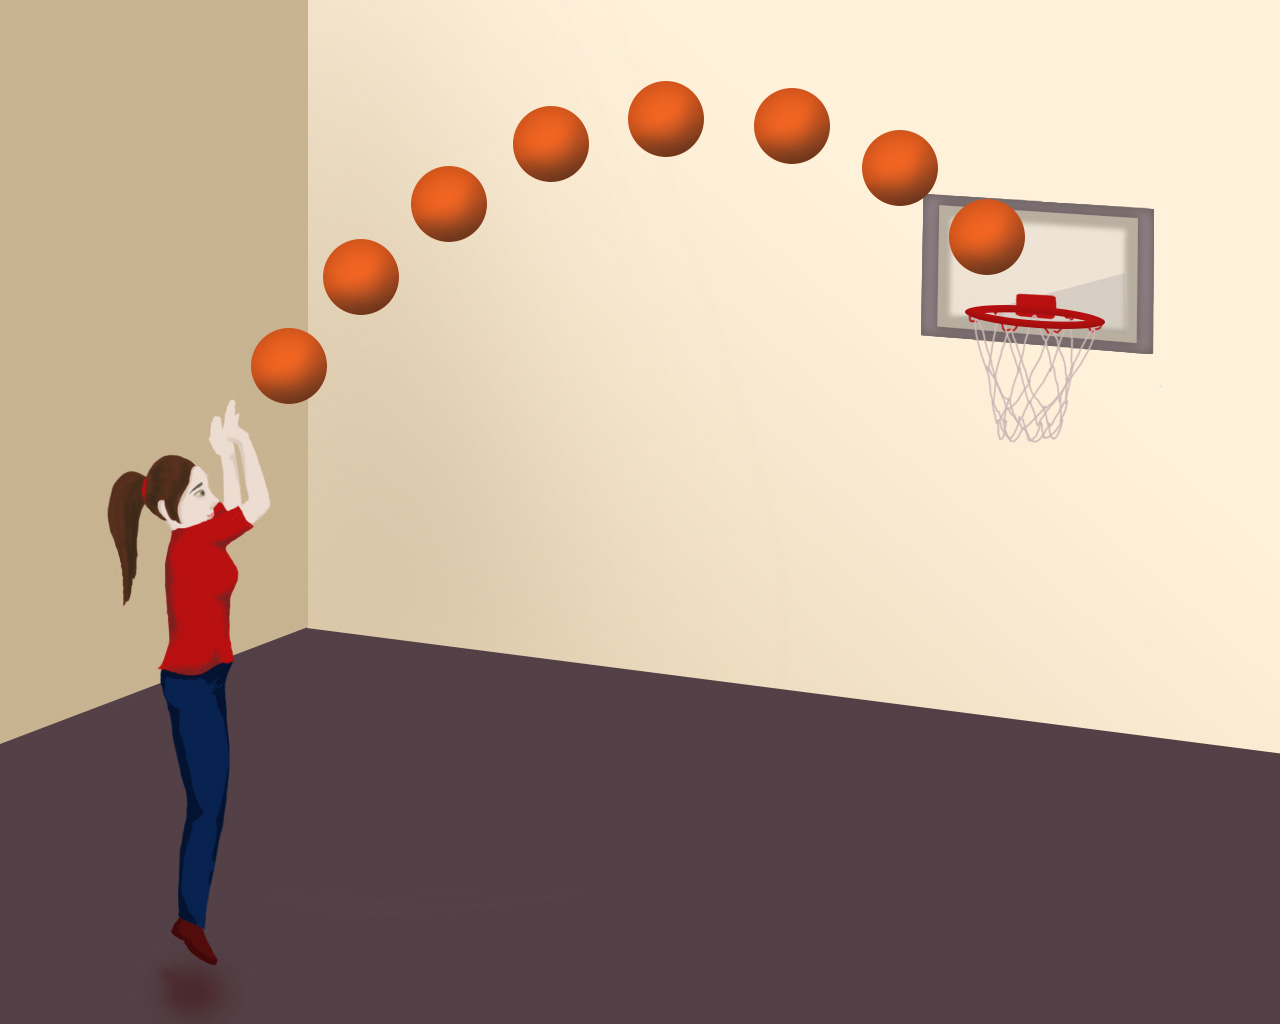 Putanja košarkaške lopte – parabola.